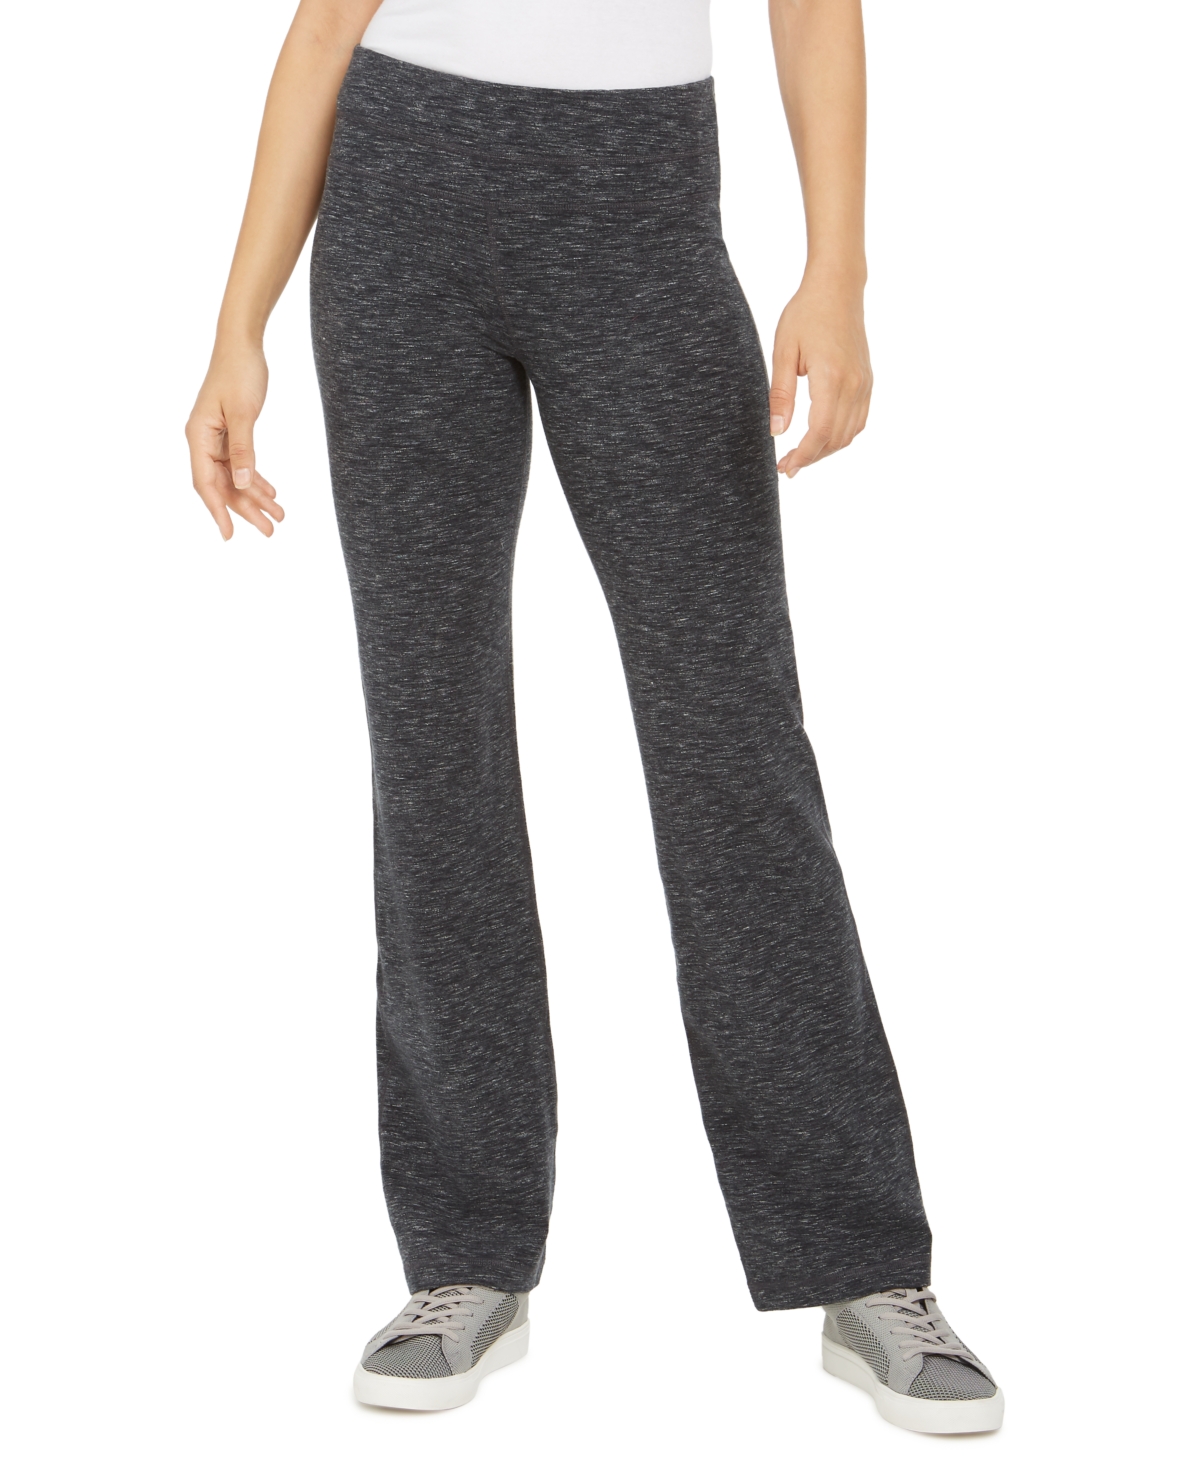 Women's Essentials Flex Stretch Bootcut Yoga Full Length Pants, Created for Macy's - Black